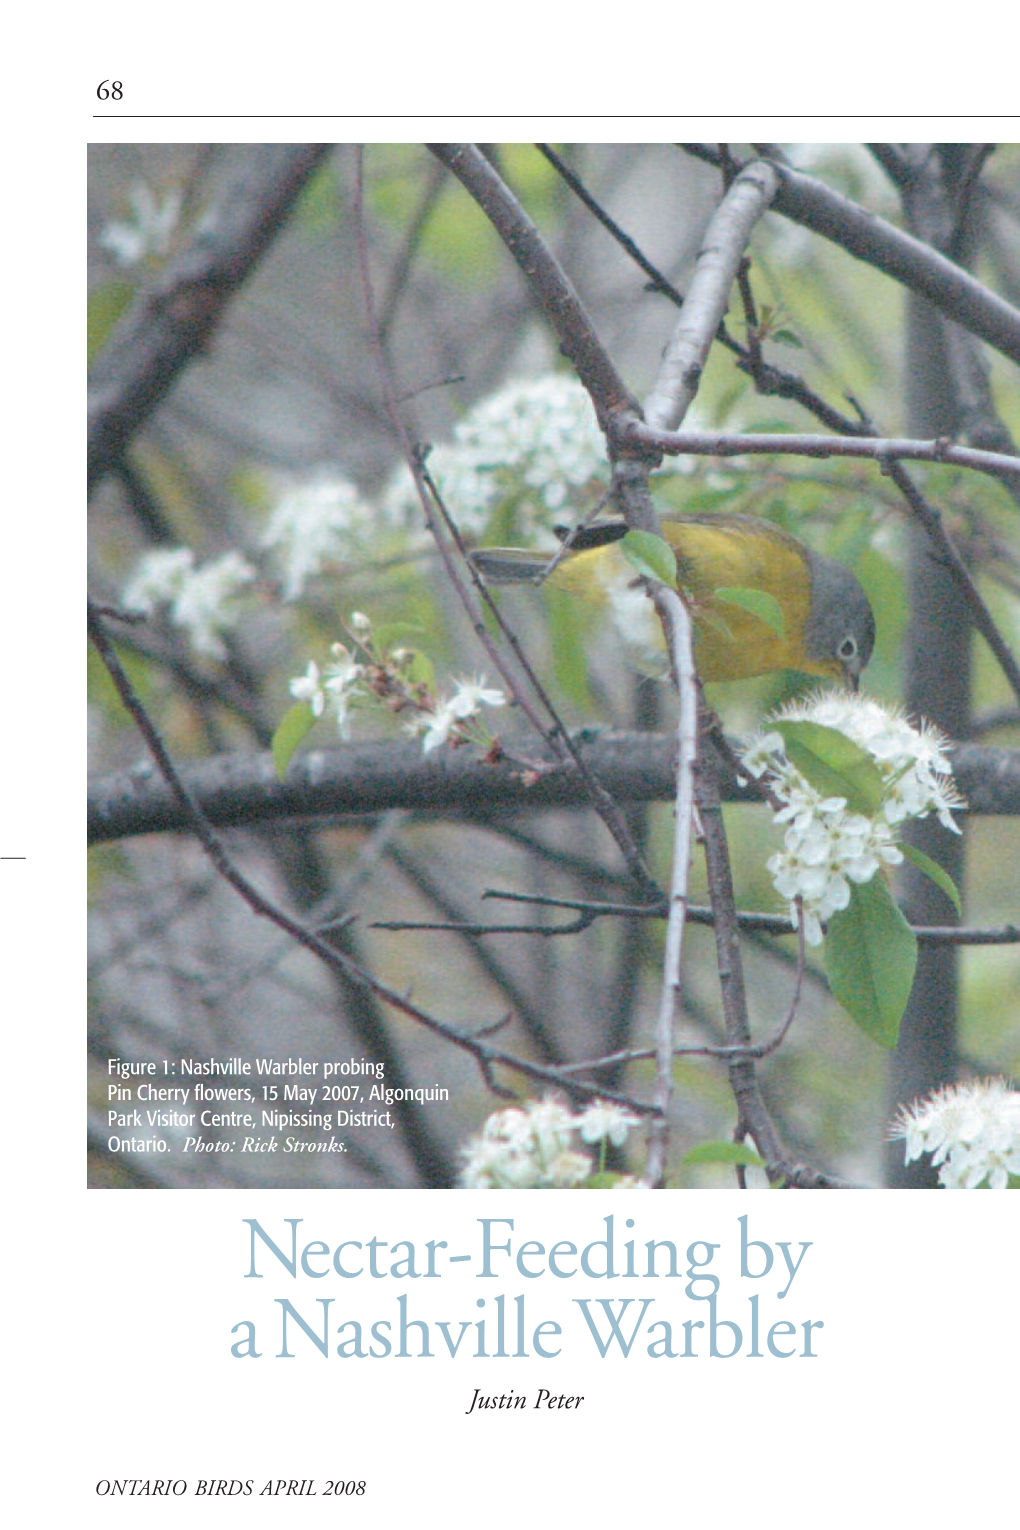 Nectar-Feeding Behaviour by a Nashville Warbler